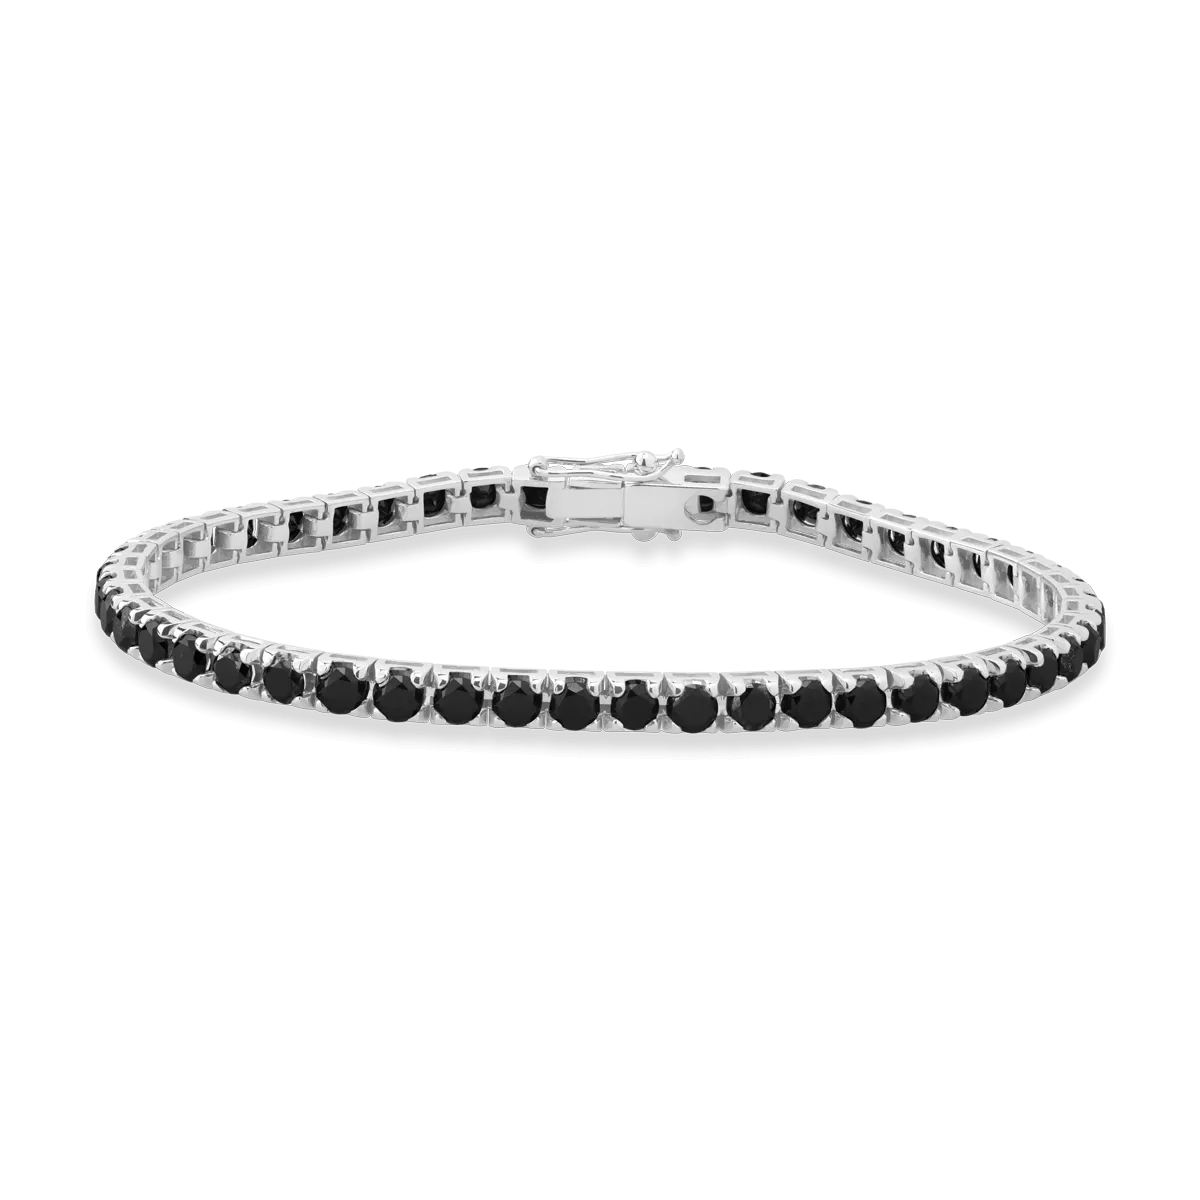 18K white gold tennis bracelet with 9.5ct black diamonds